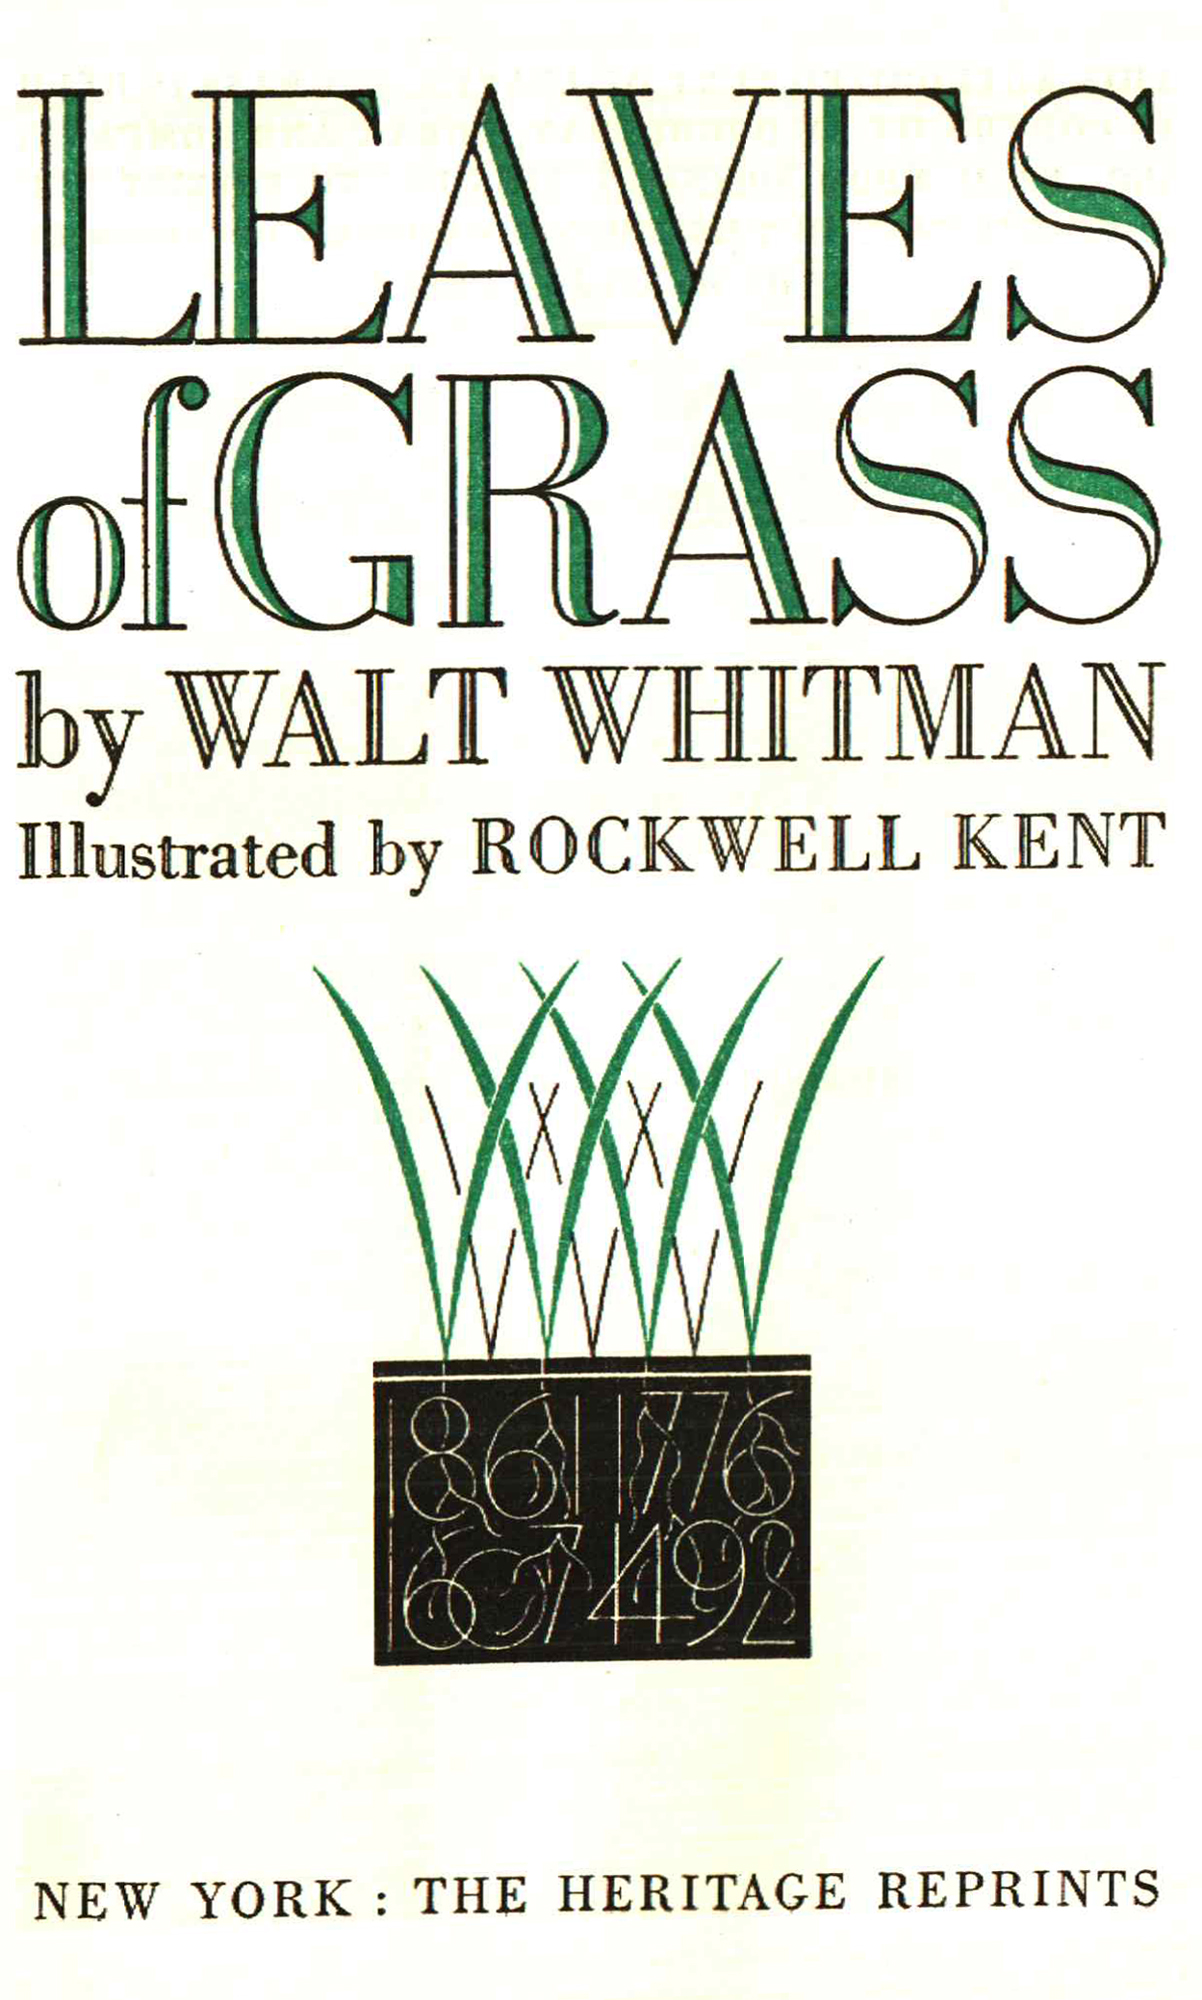 Walt Whitman Homoeroticism in Leaves of Grass